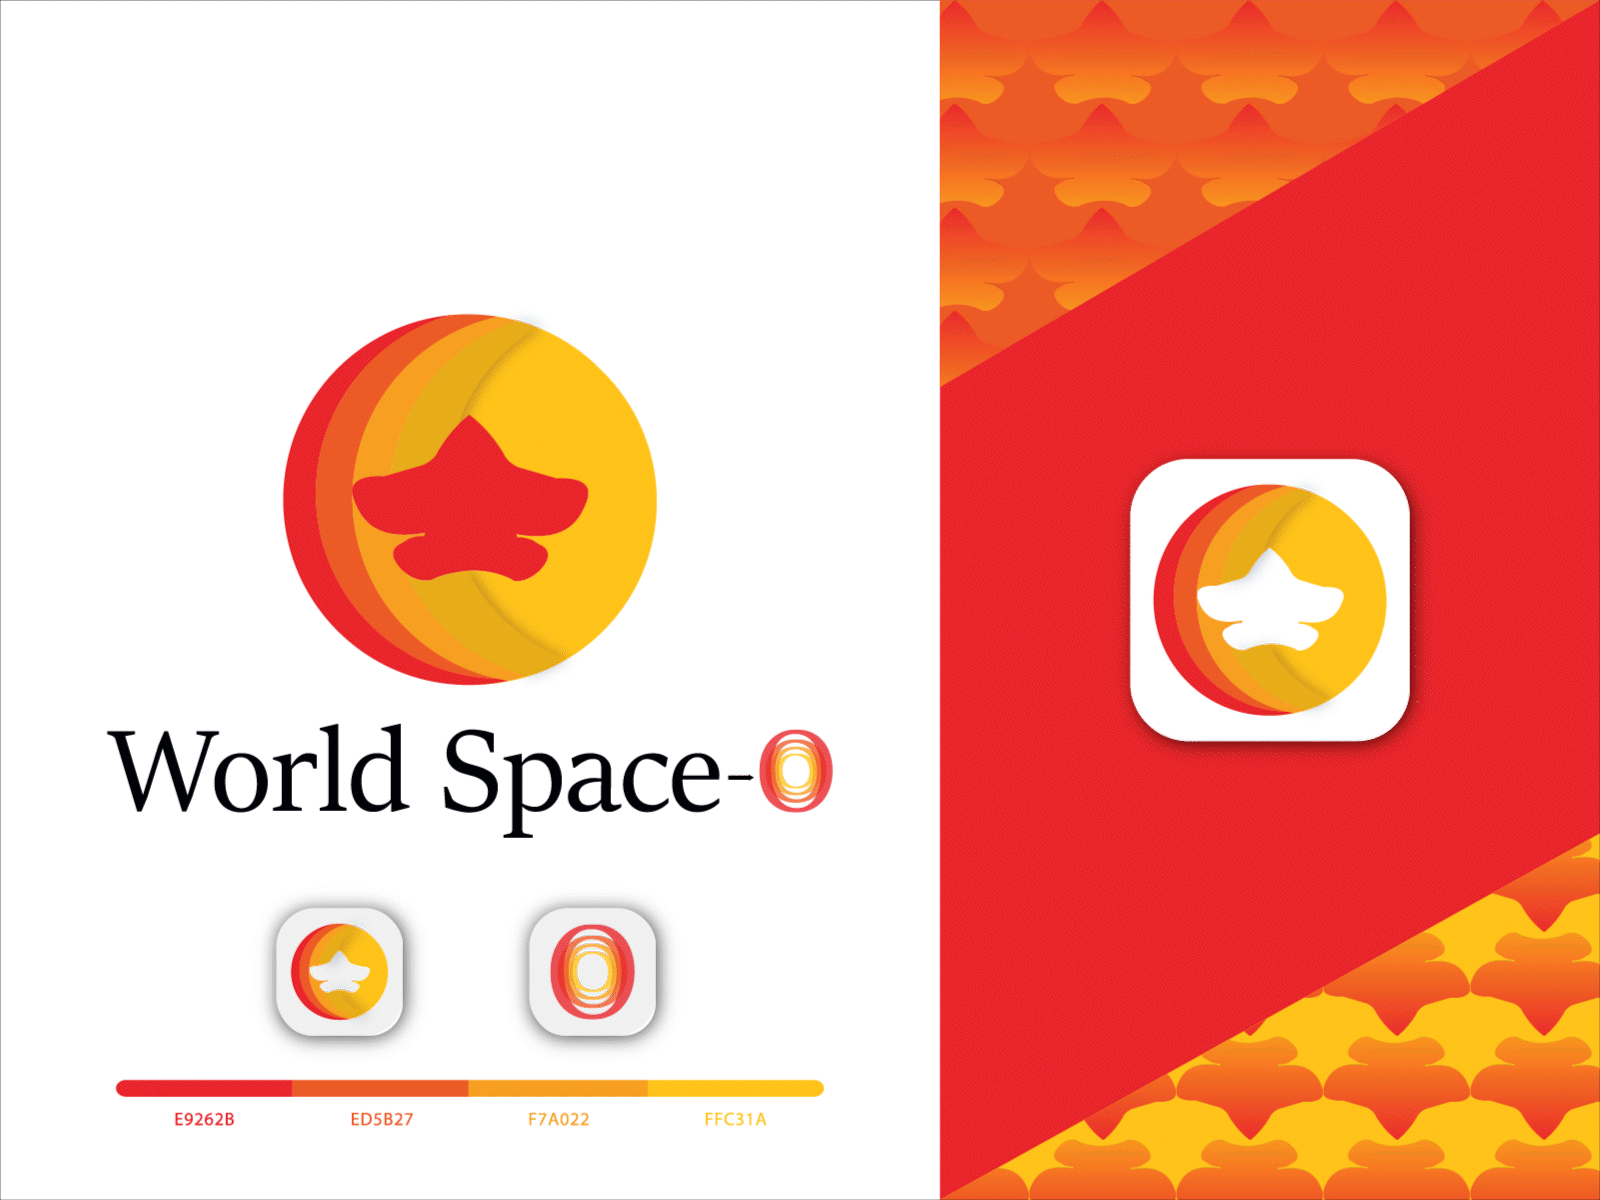 World Space-o